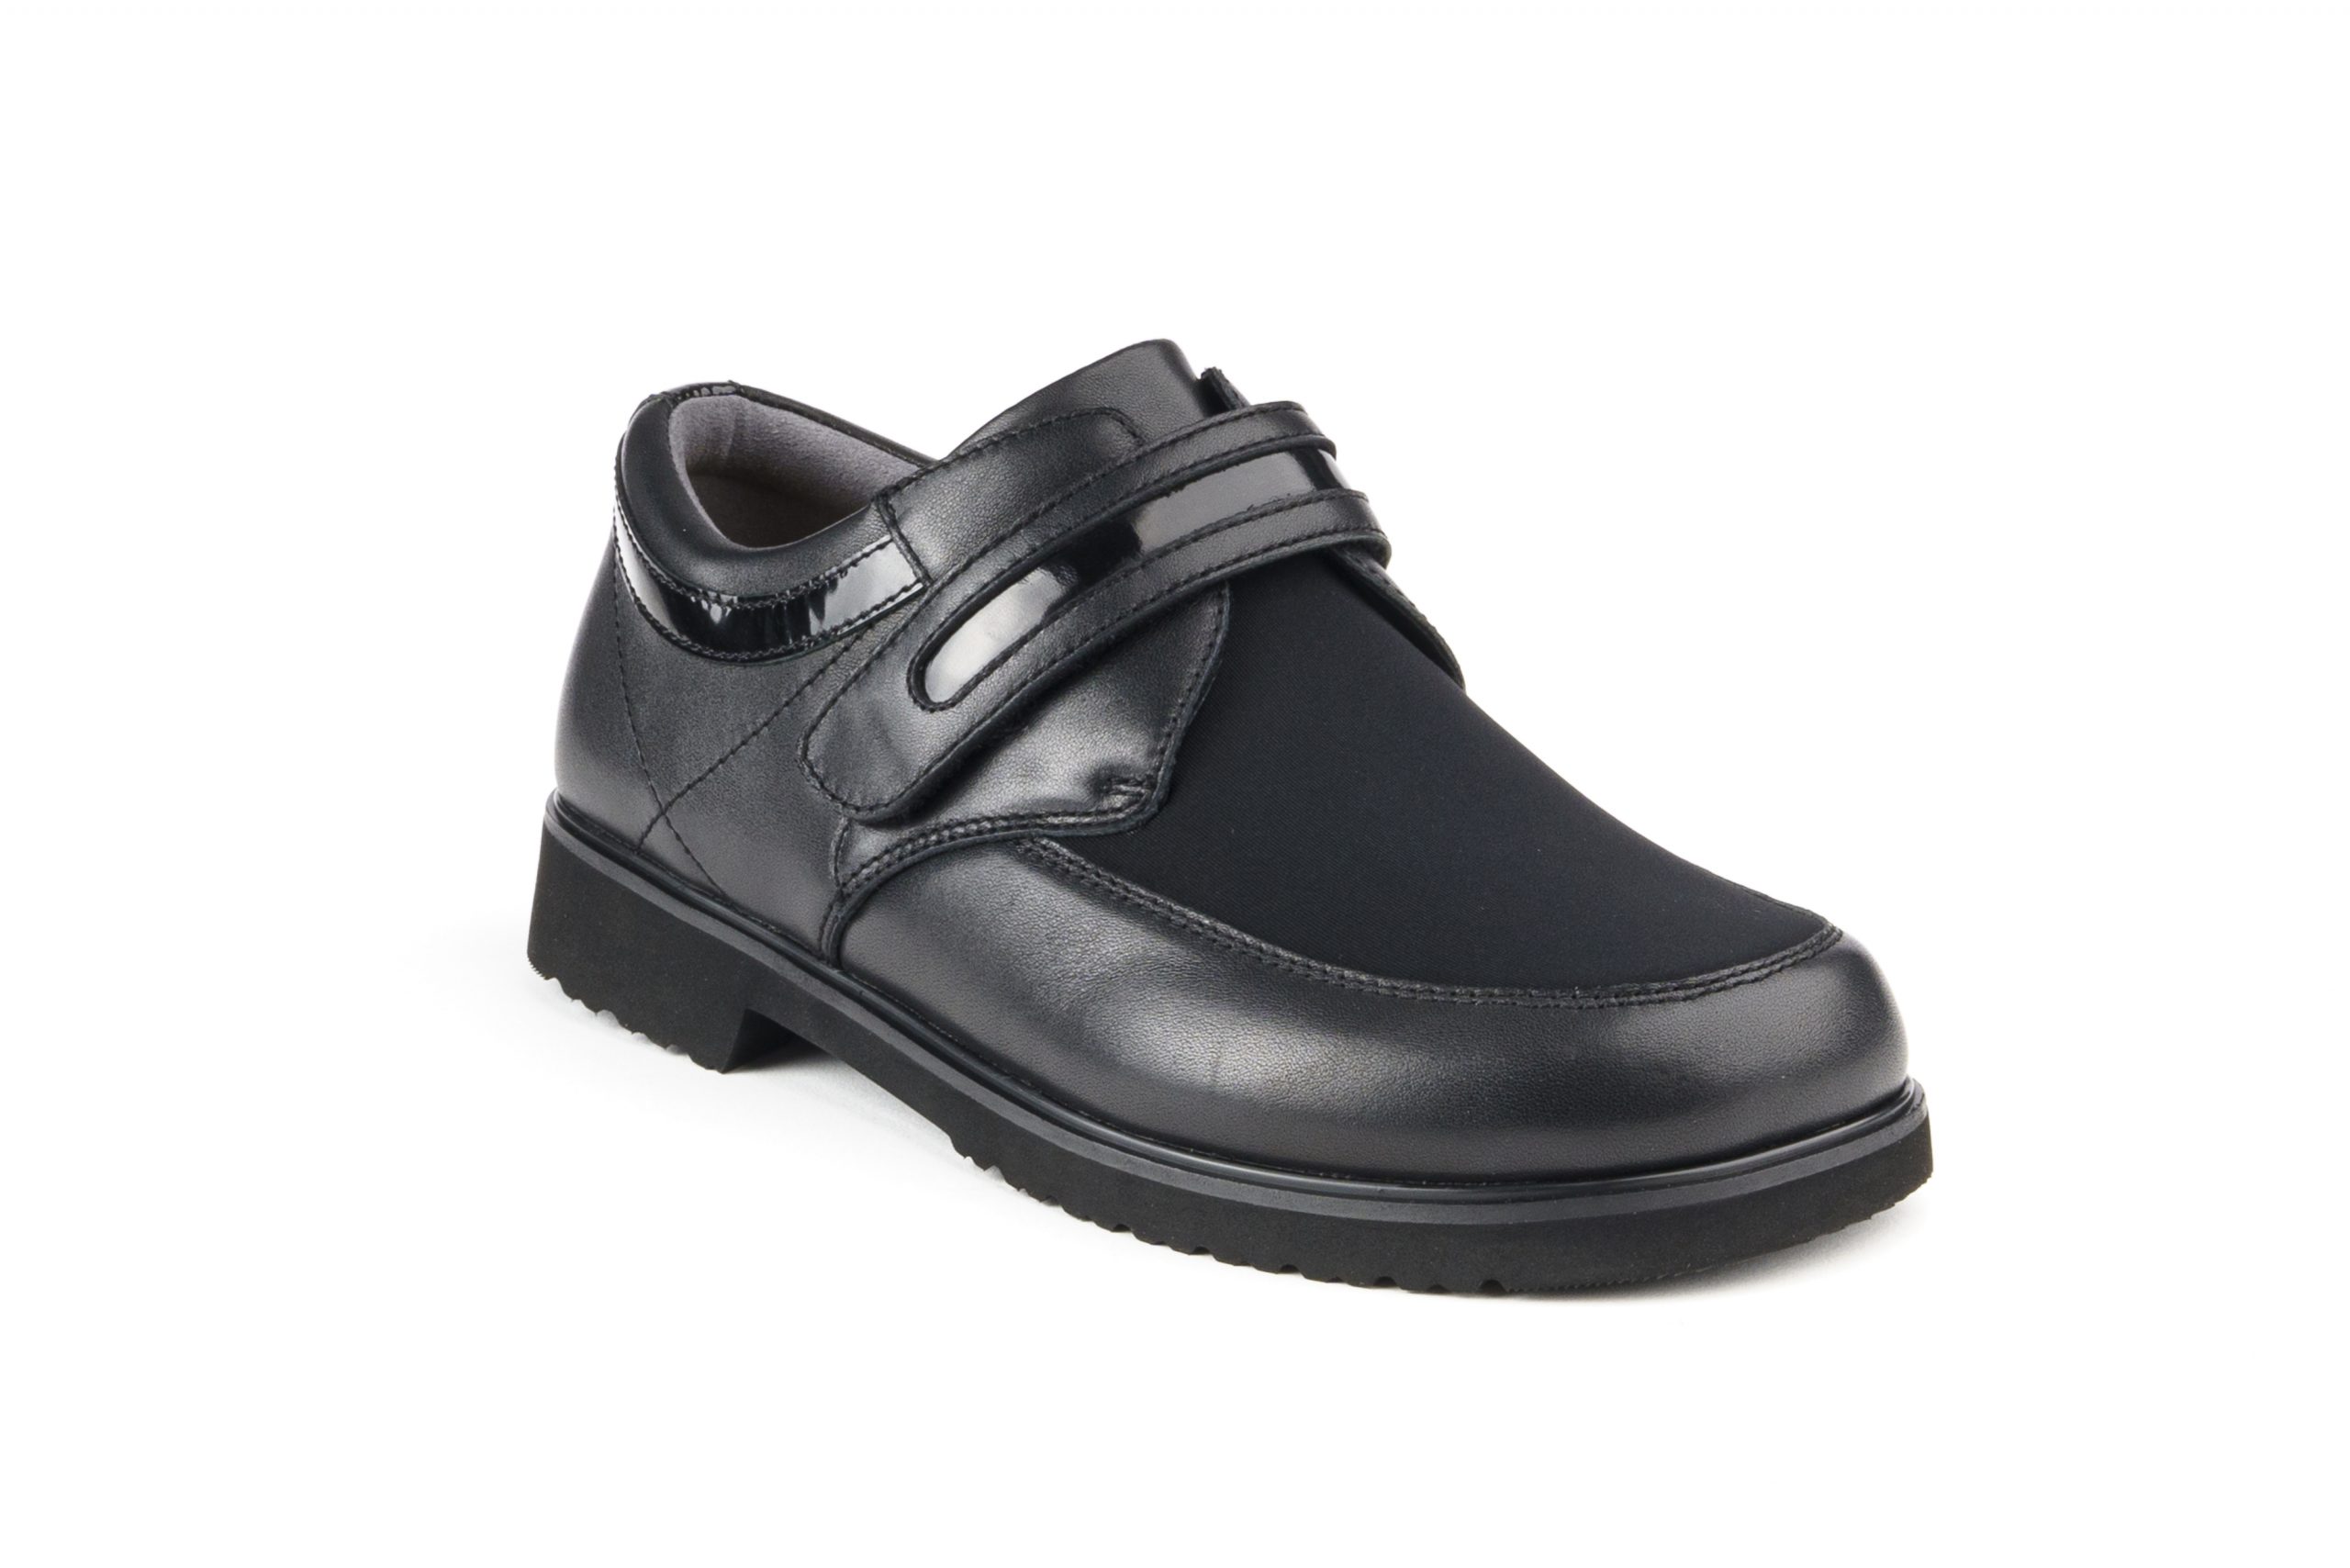 OC Albany - Gadean Footwear